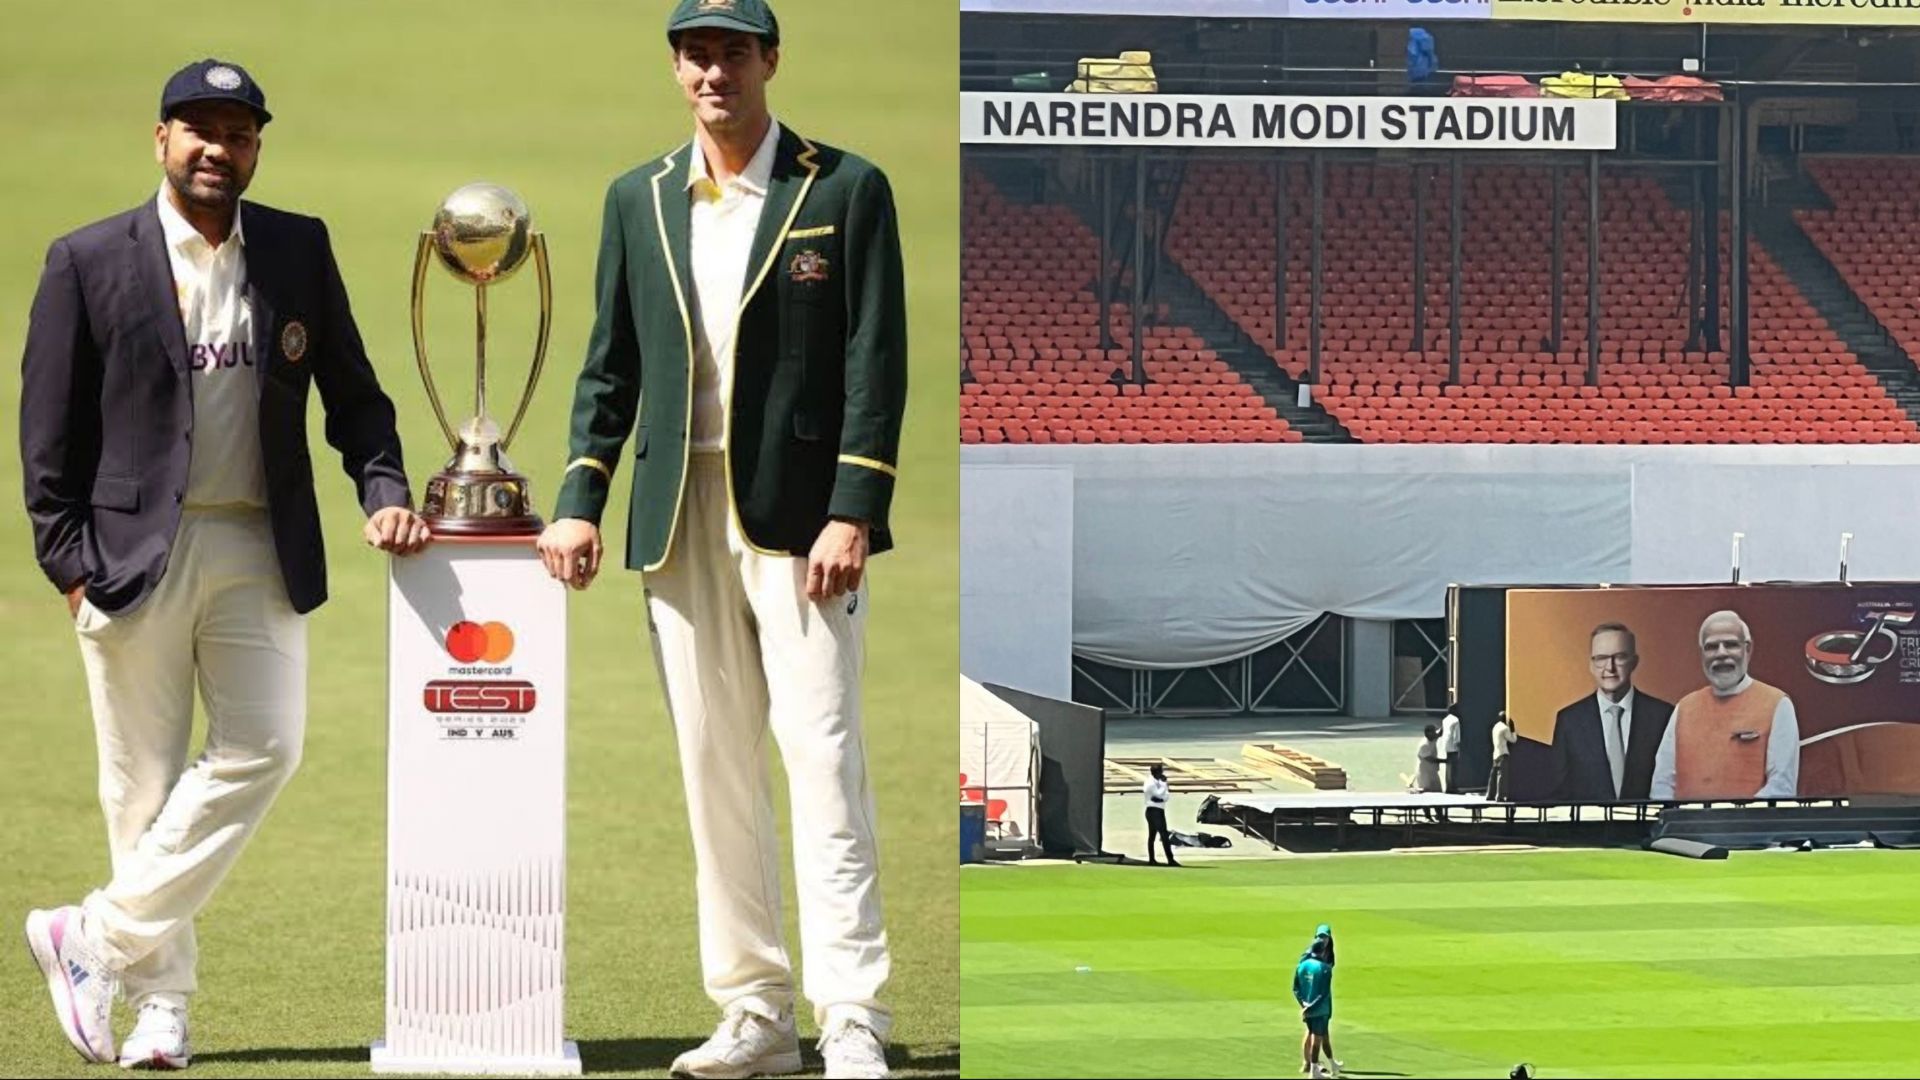 Narendra Modi Stadium will host the 4th Test (Image: Twitter)